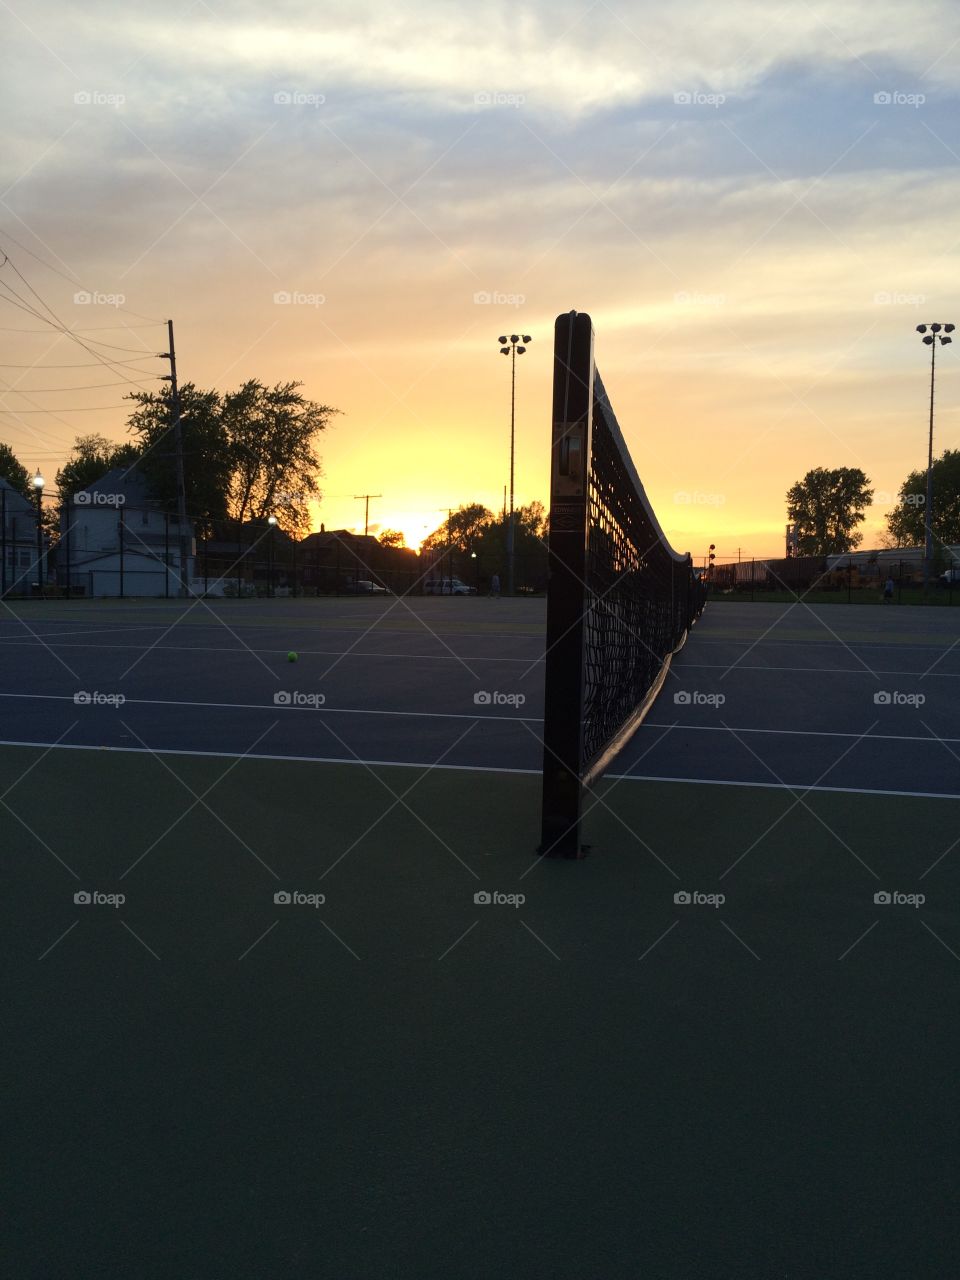 Sunset on Tennis court. Tennis court at sunset